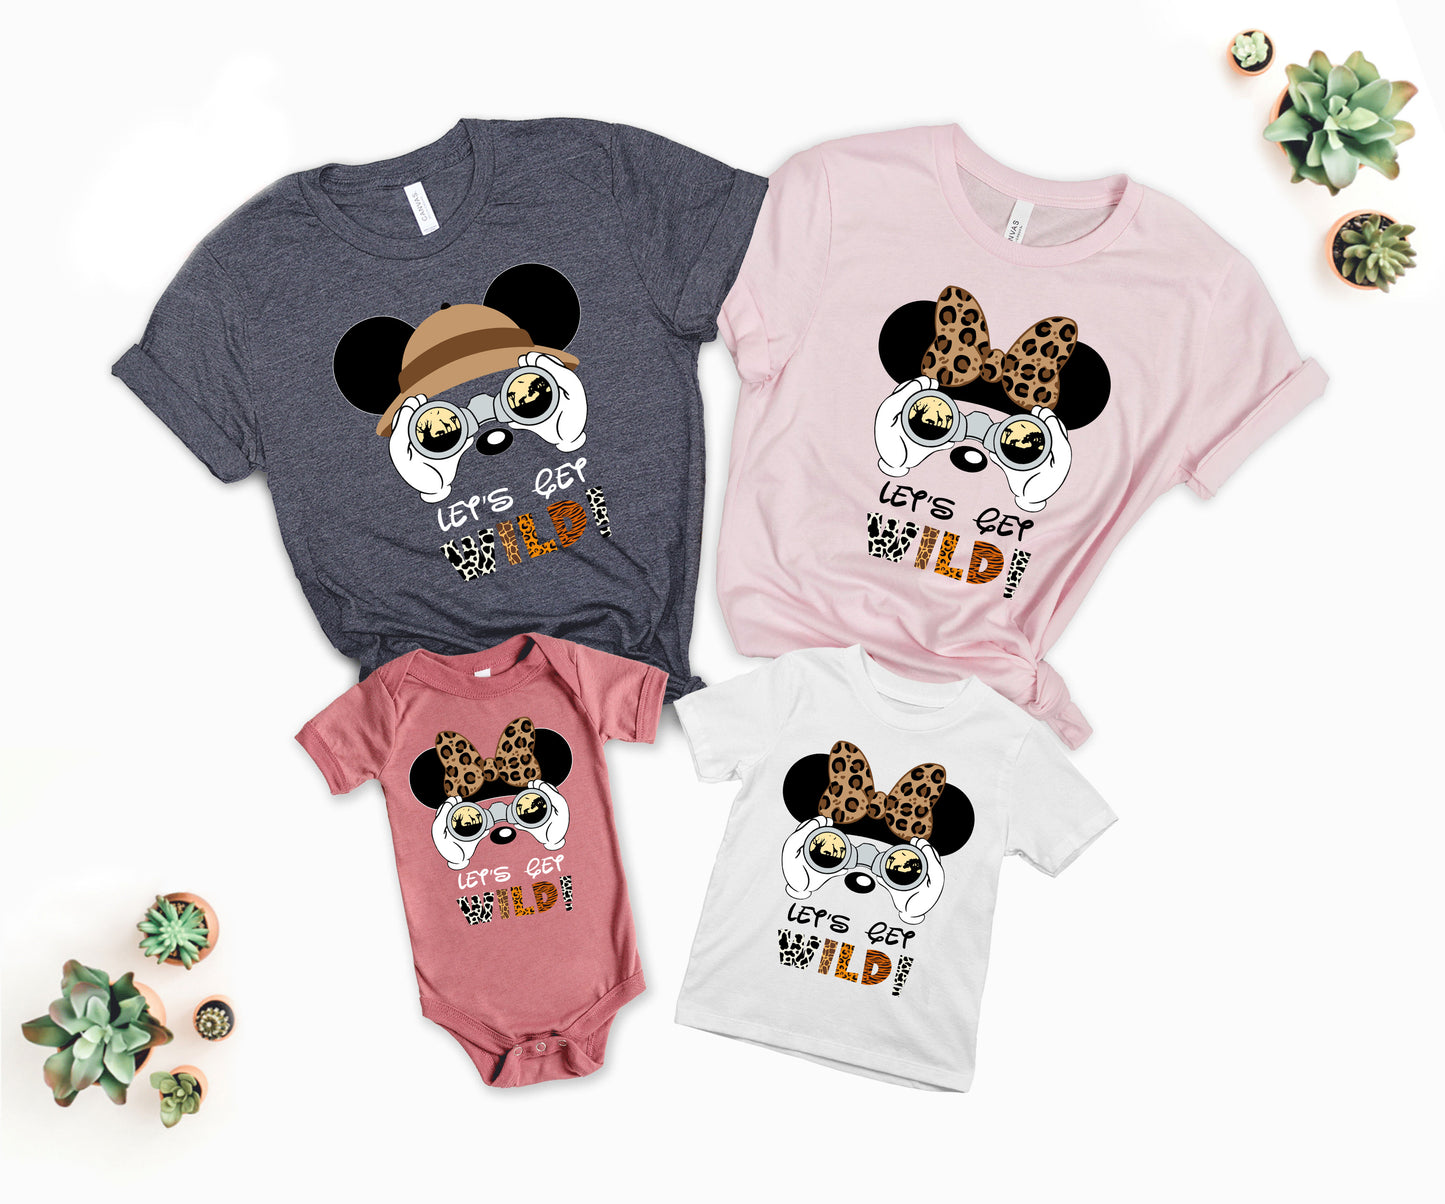 Disney Safari Shirt, Disney Animal Kingdom Shirt, Disney Safari Outfit - newamarketing